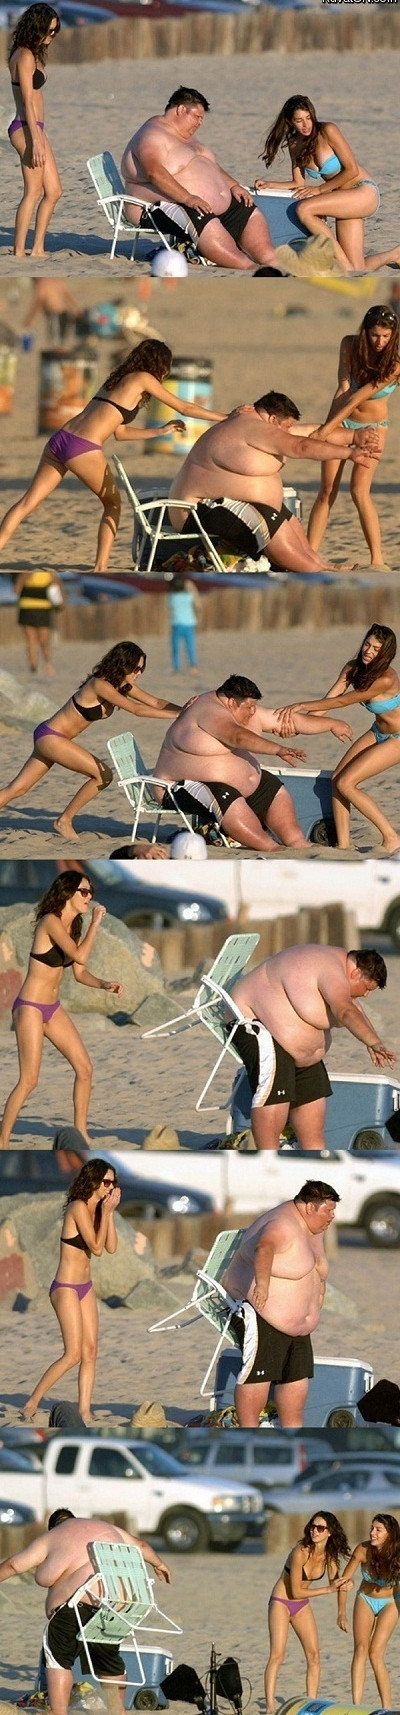 Fat guy on beach